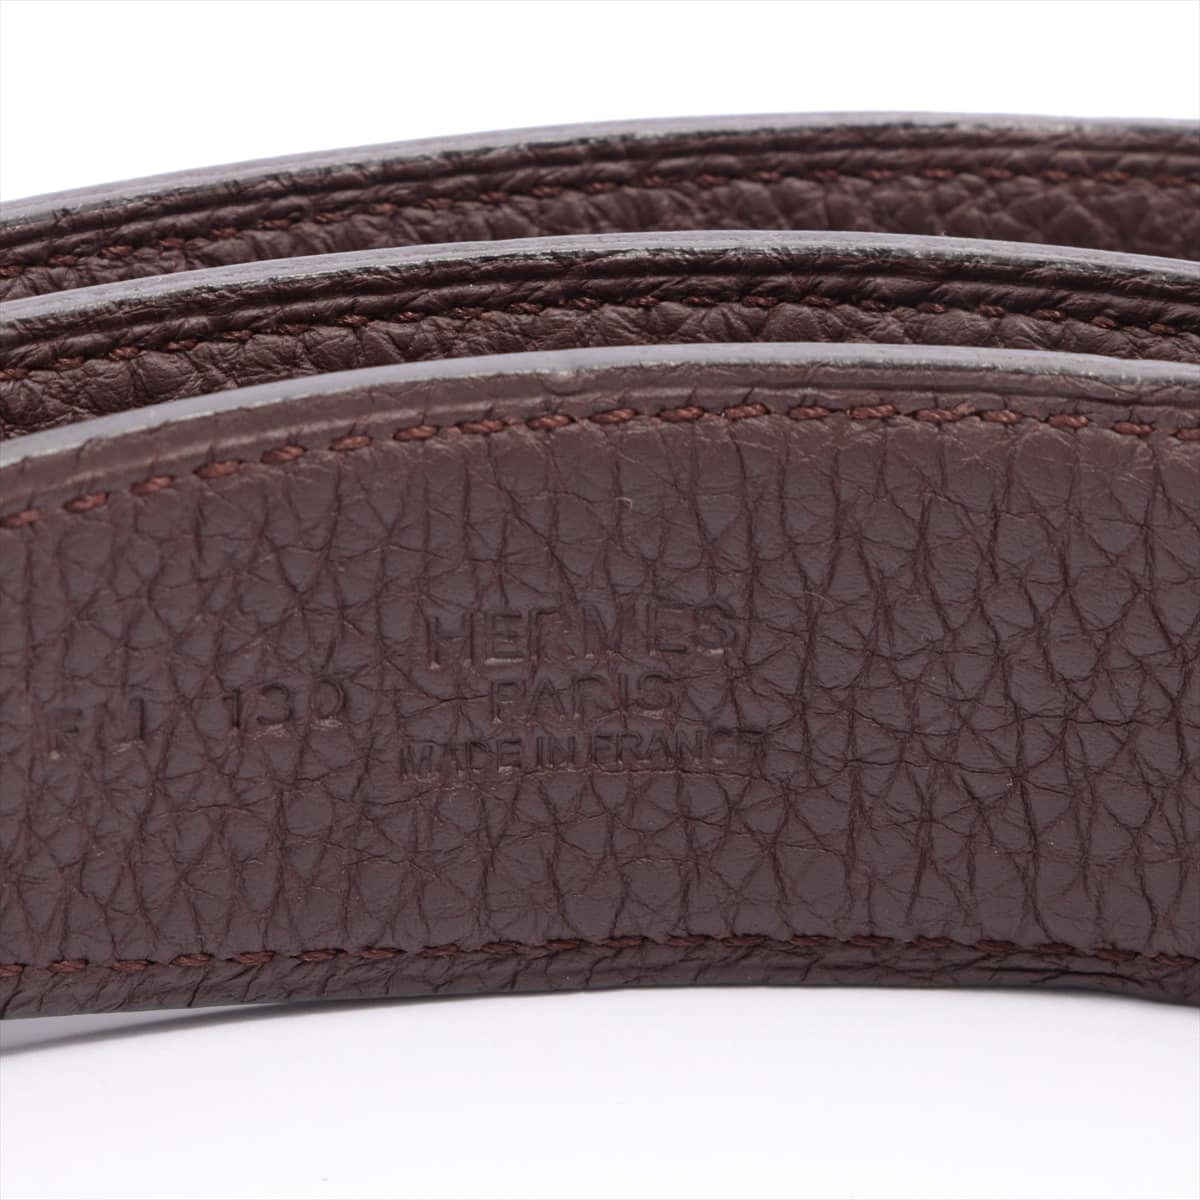 Hermès Touareg H Belt D engraving: 2019 Belt Leather & 925 Black